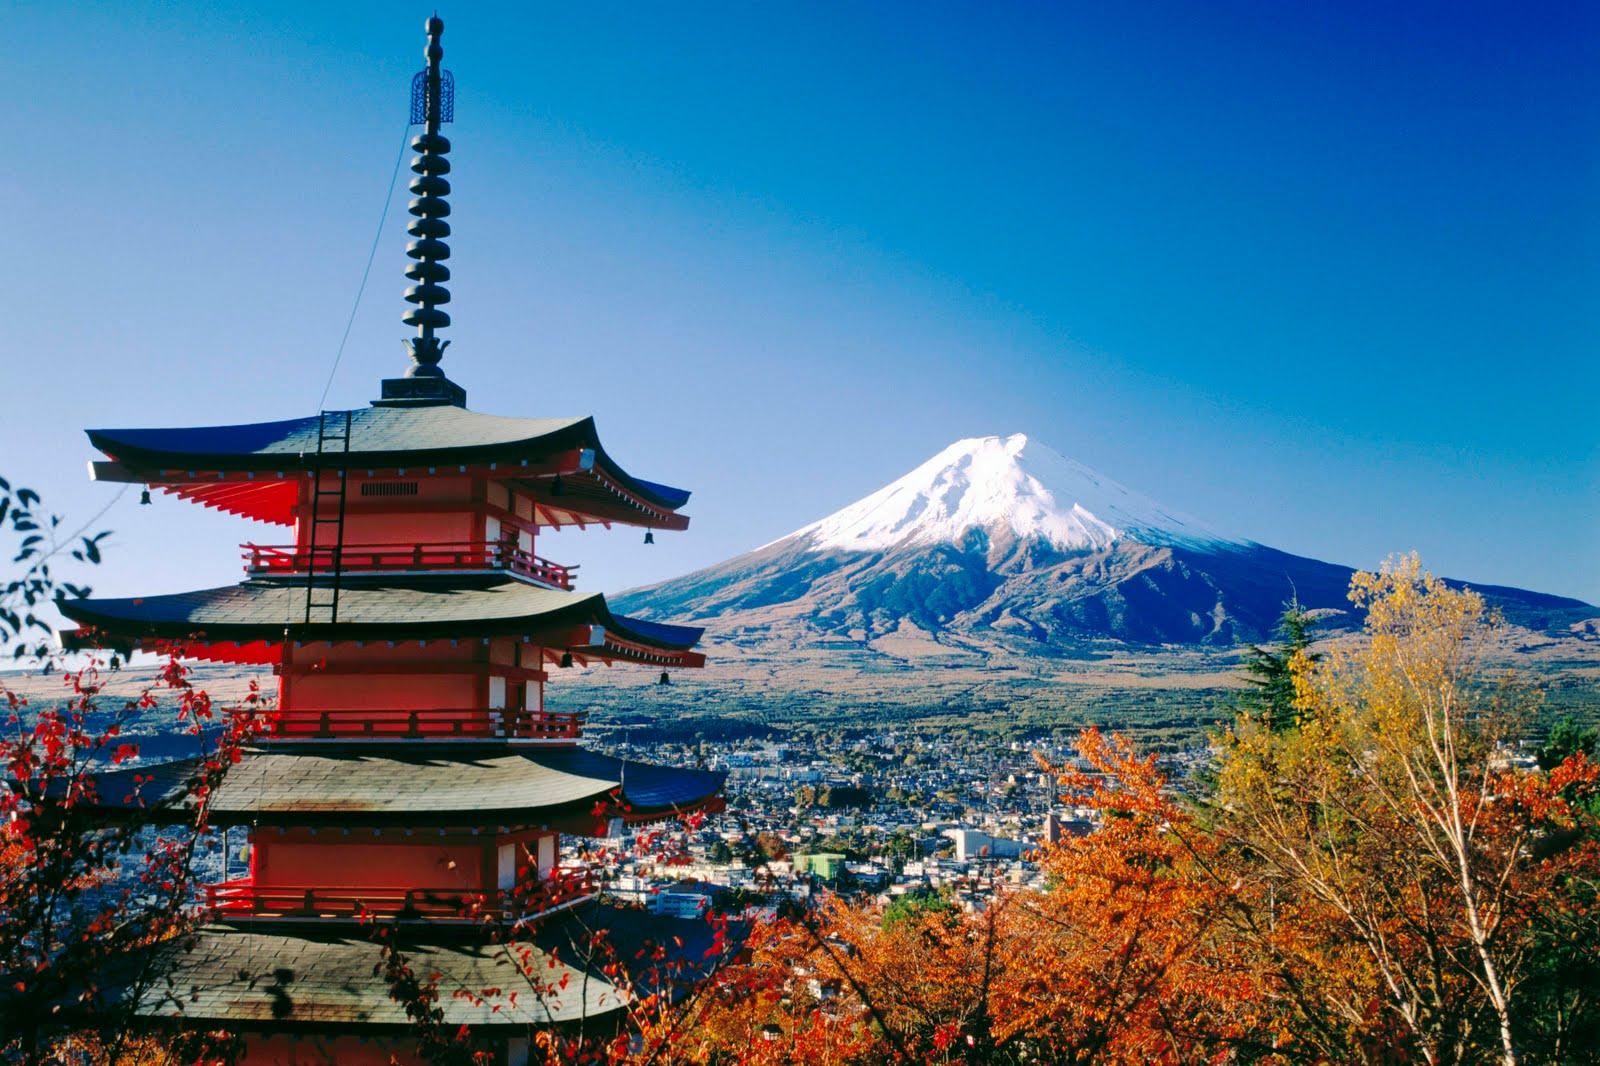 Great Wallpapers Everyday: Japan Fujiyoshida and Mount Fuji Wallpapers